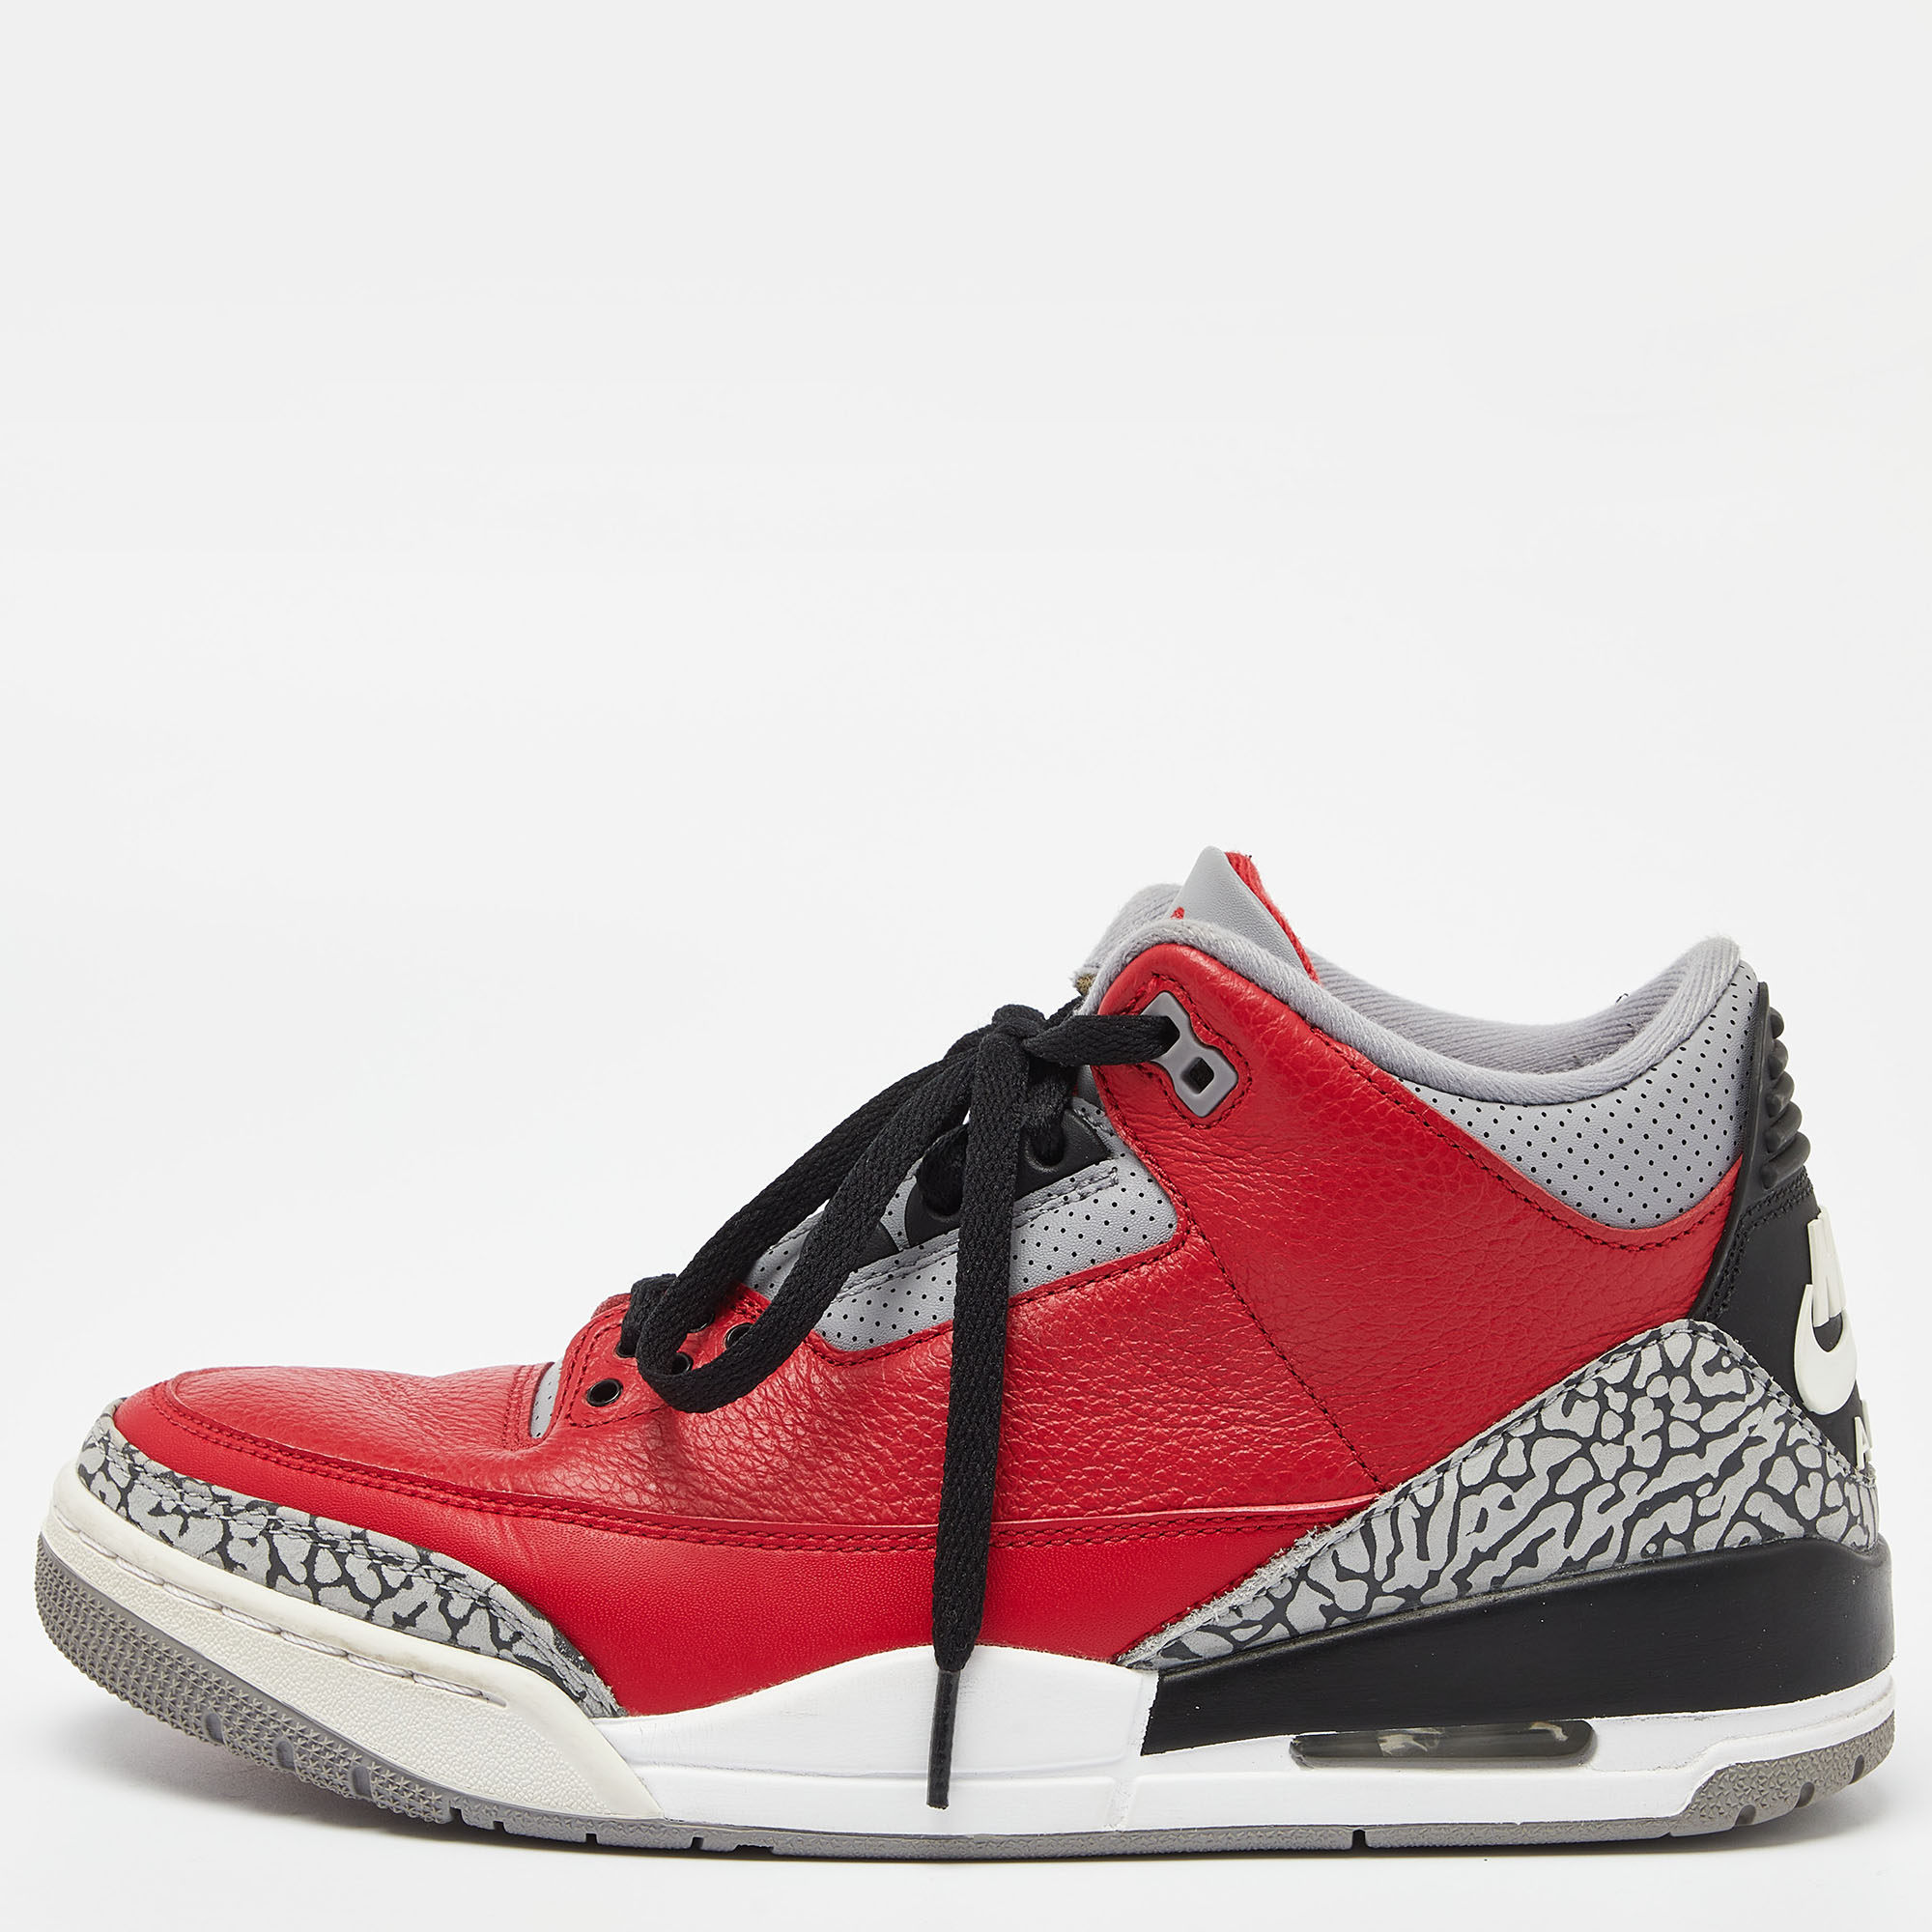 

Air Jordans Red Leather Jordan 3 Retro SE Unite Sneakers Size 42.5